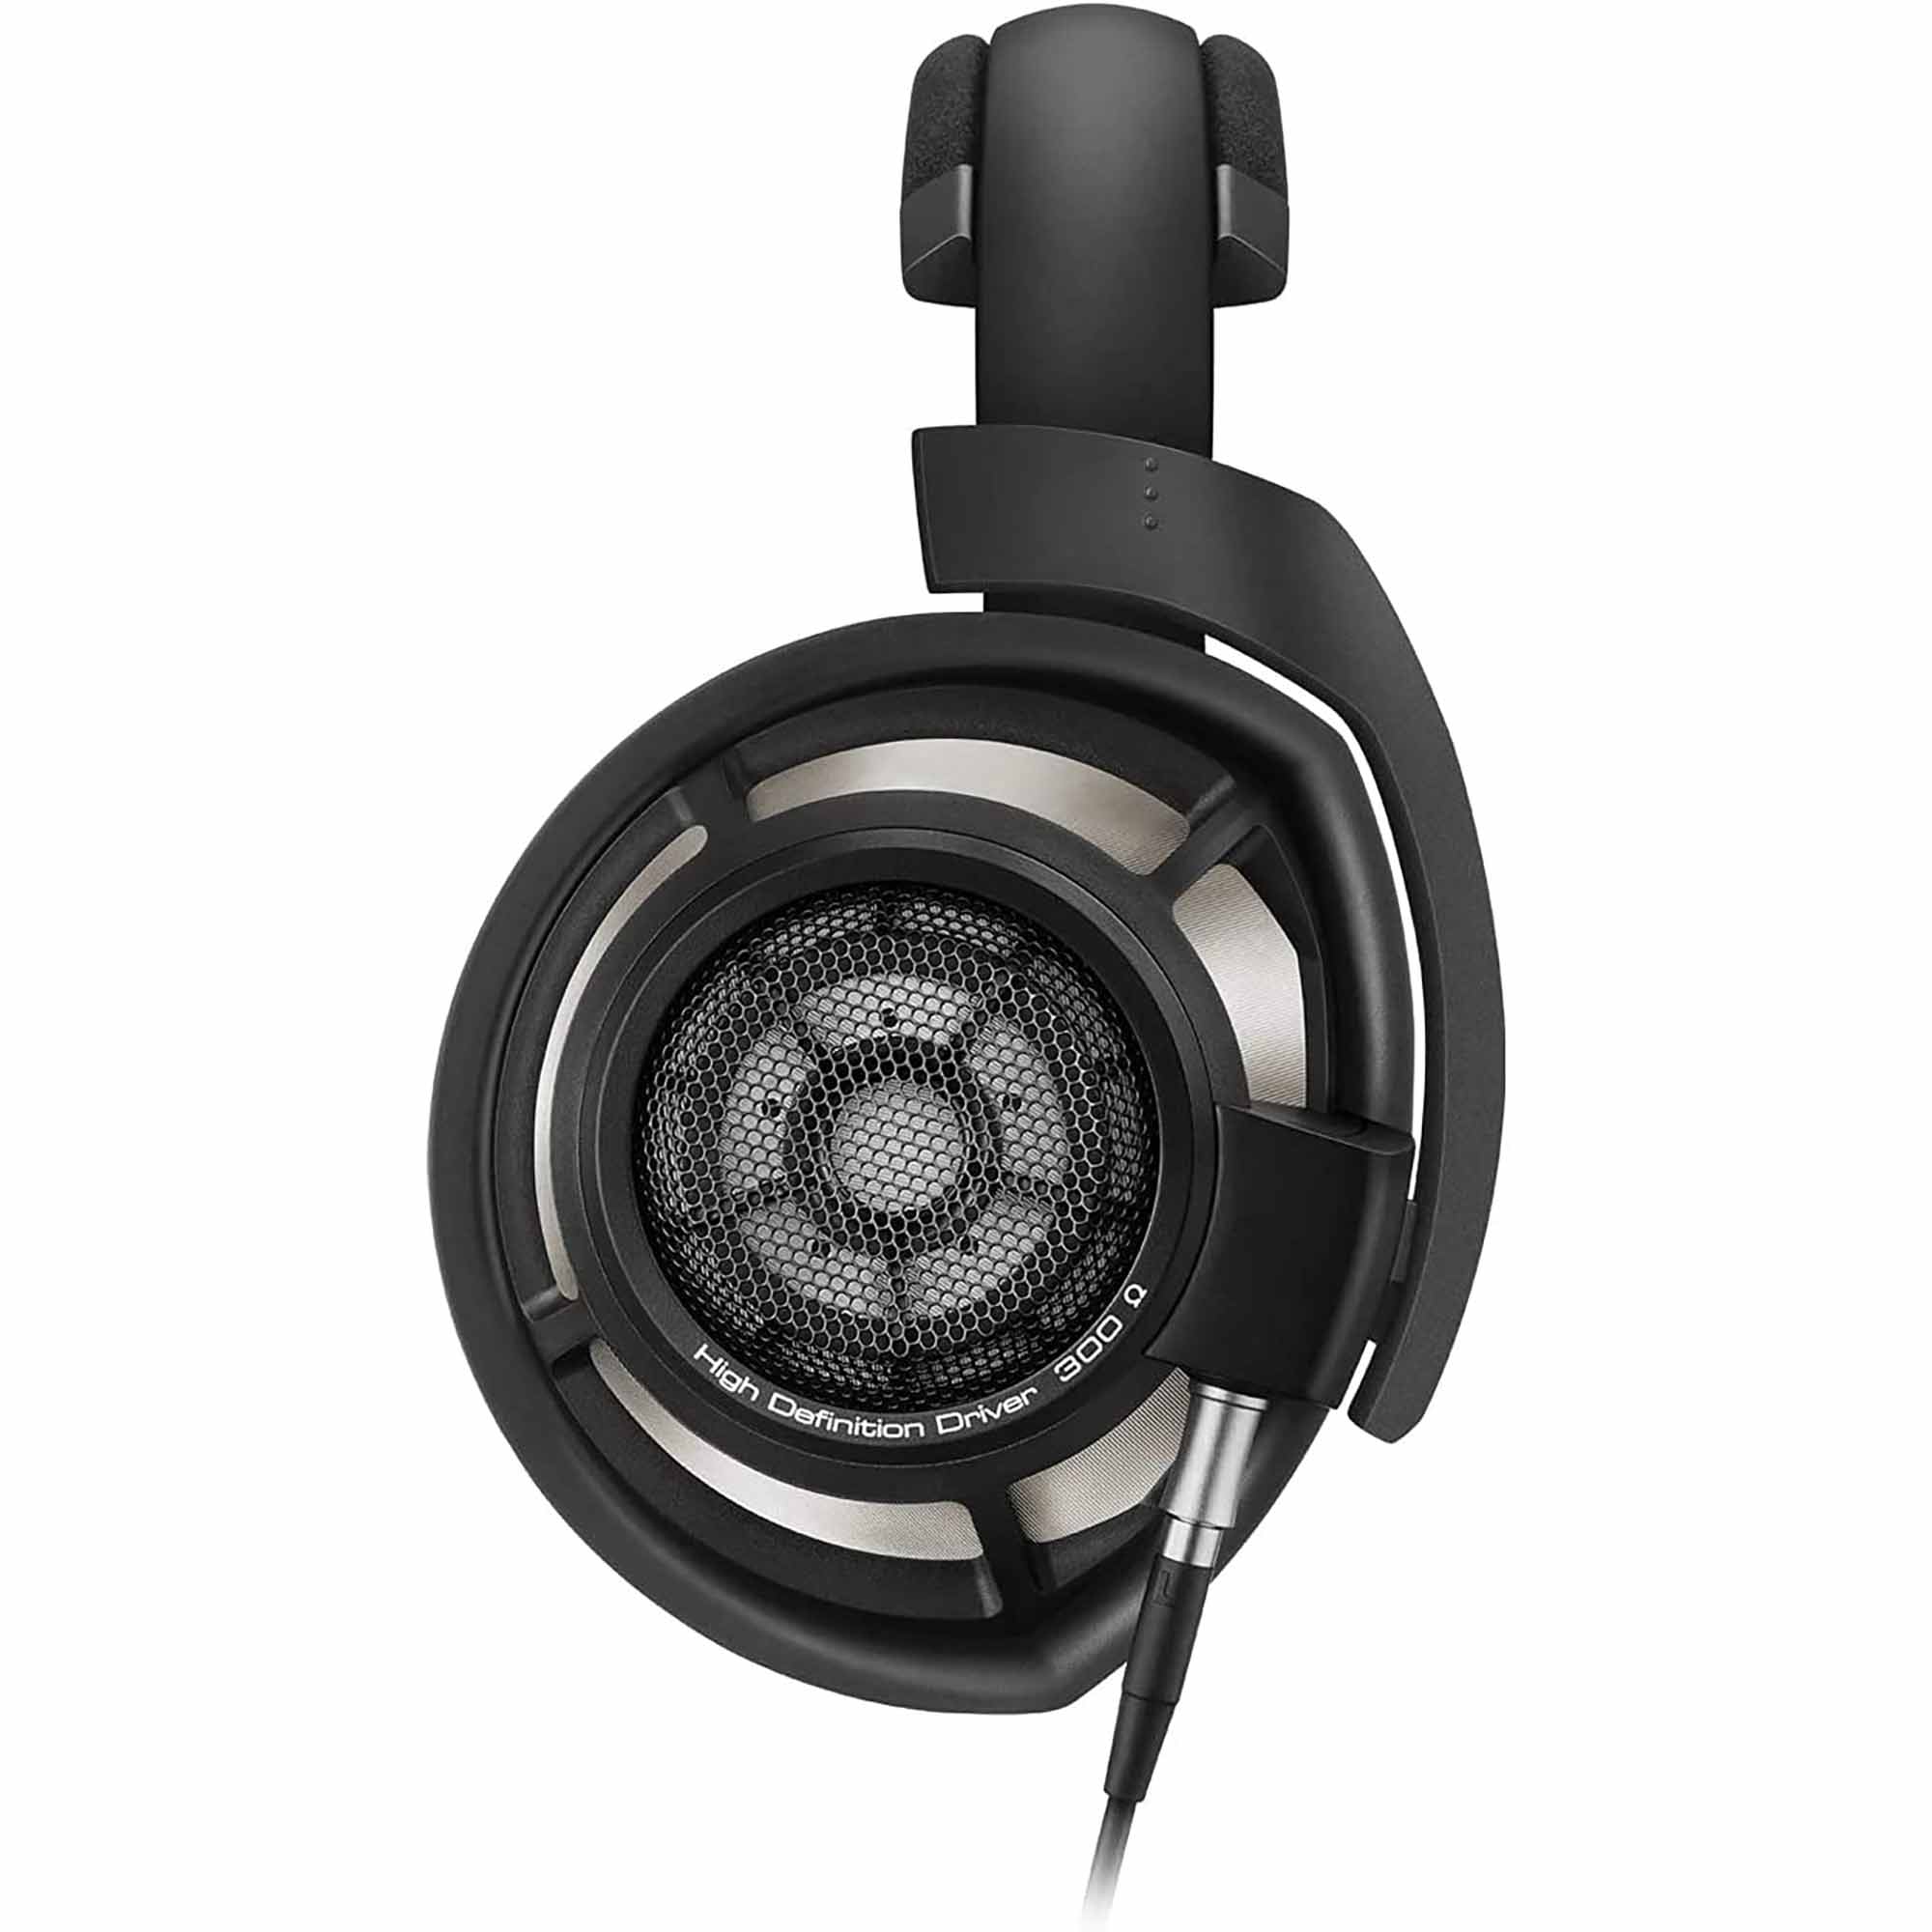 I'm in love with the Sennheiser HD599 : r/headphones